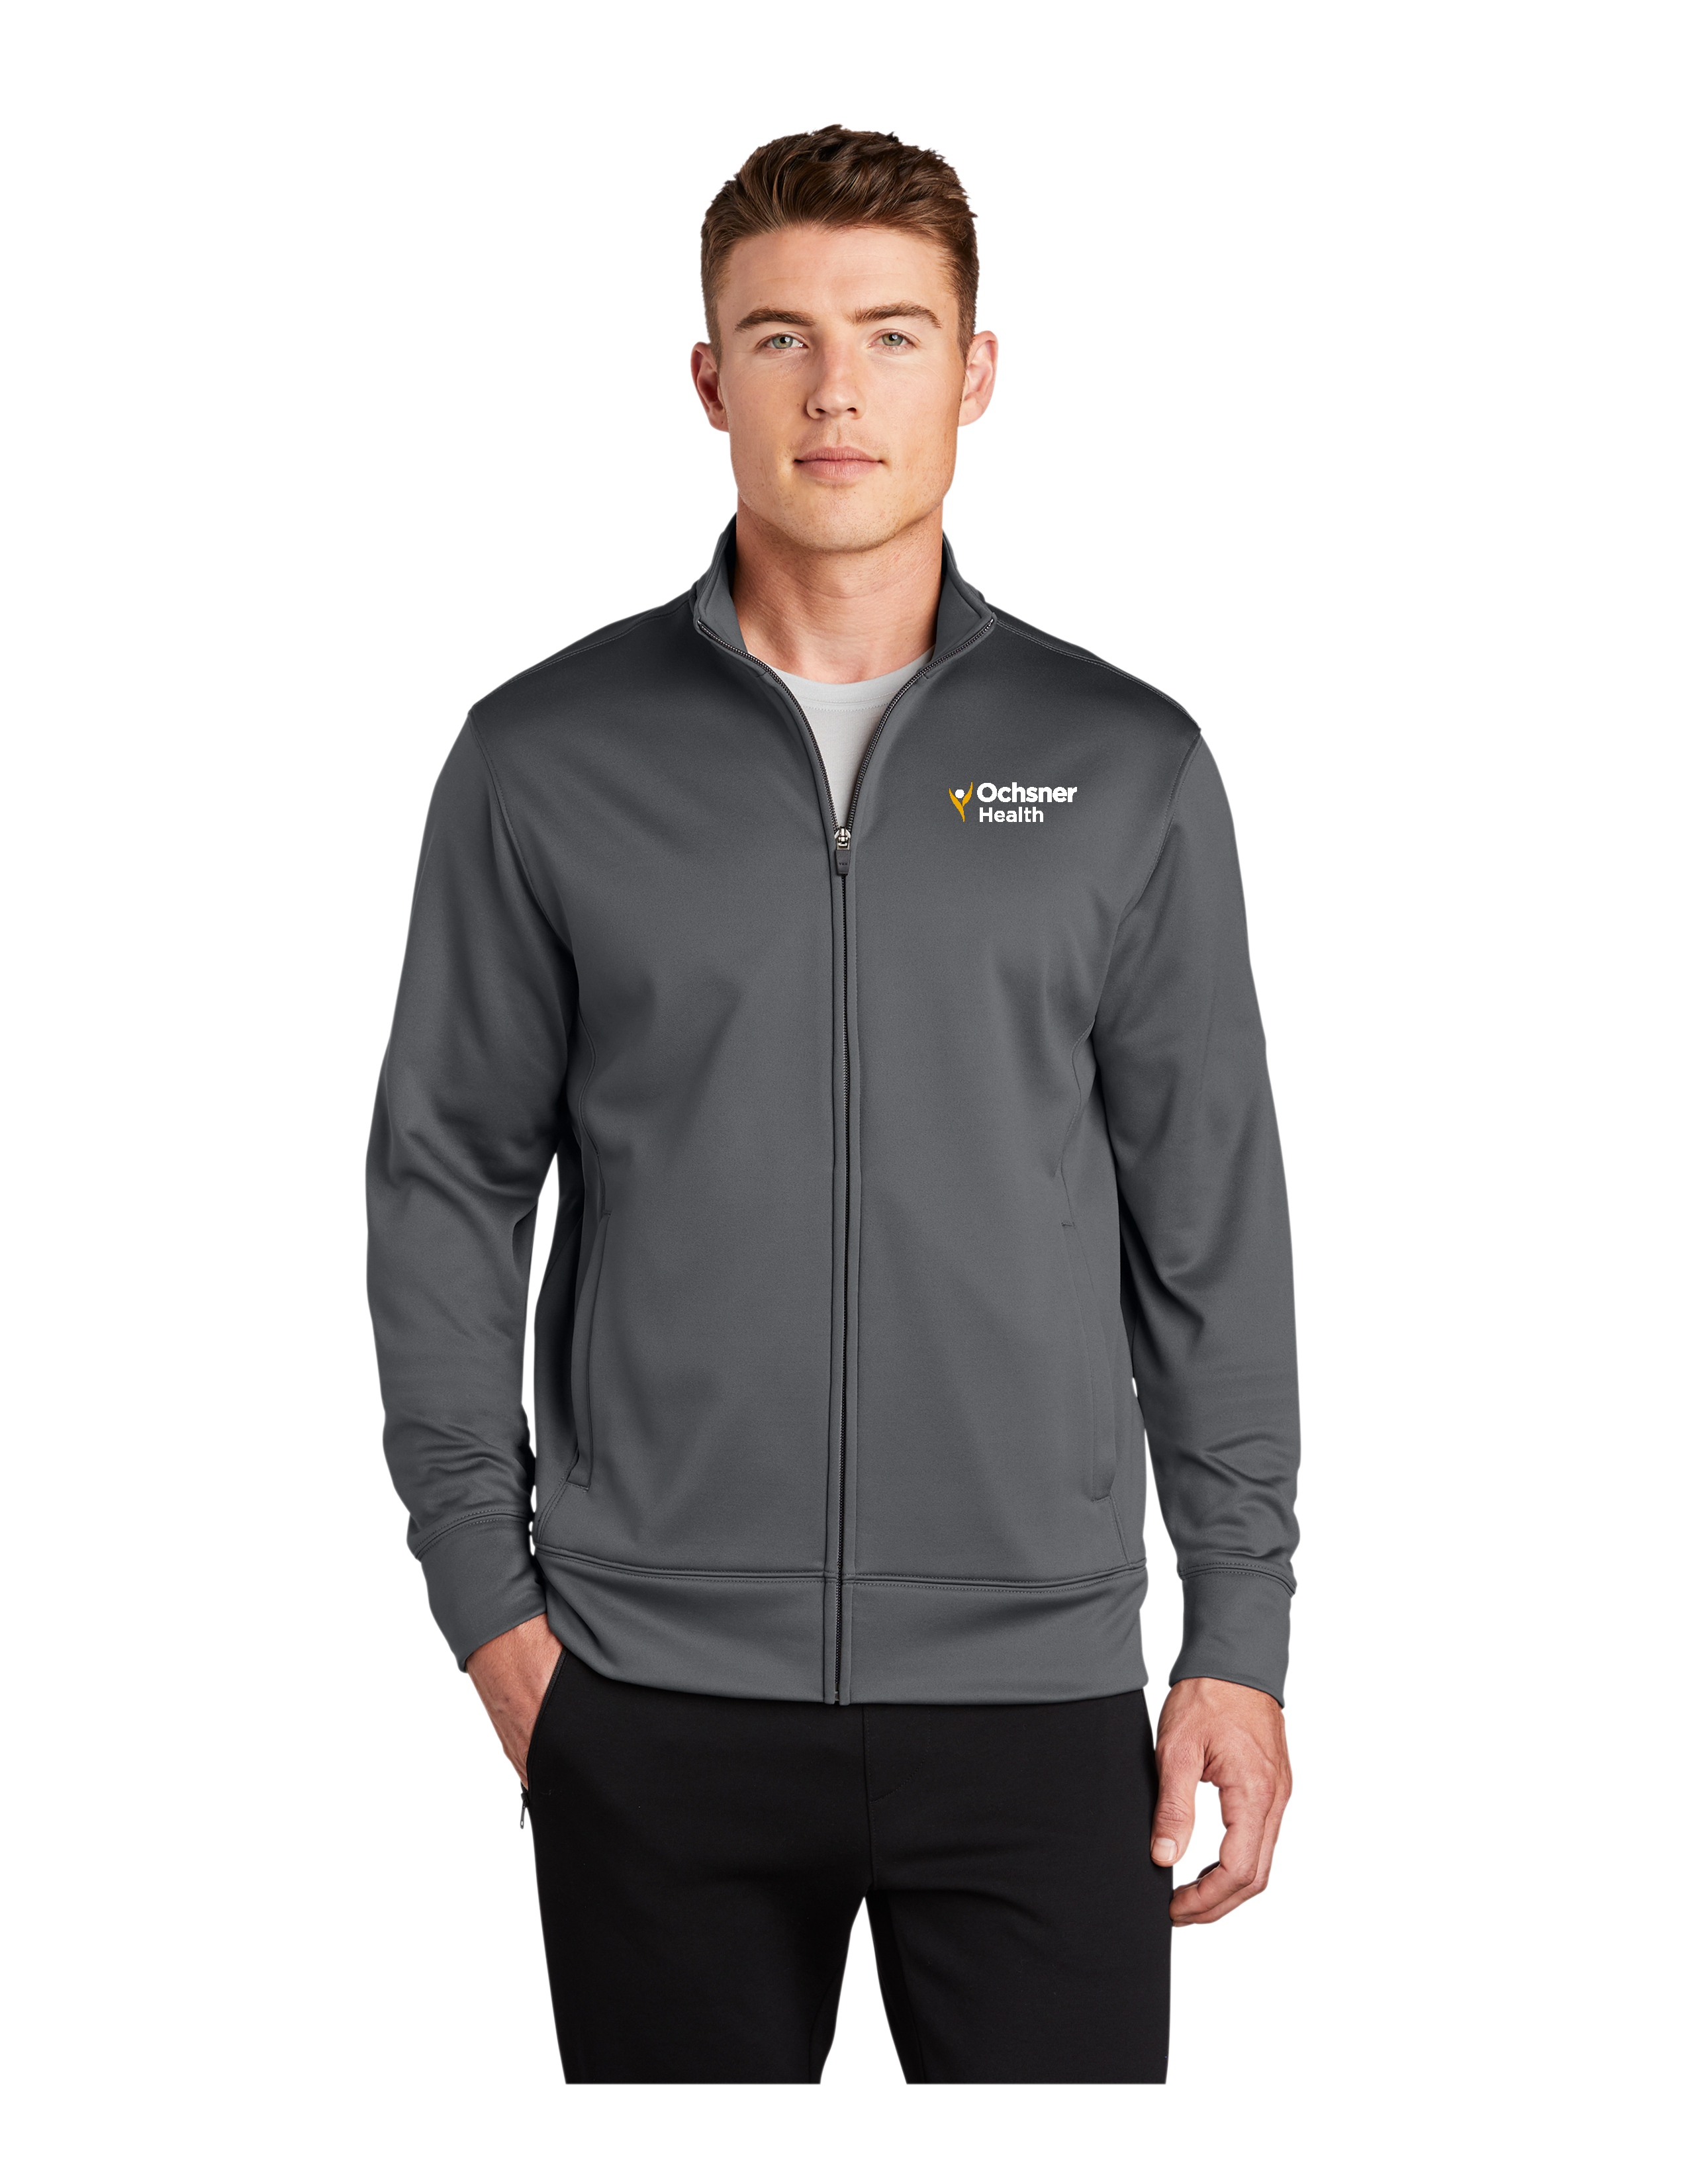 Men's Sportwick Fleece Jacket, Gray, large image number 1